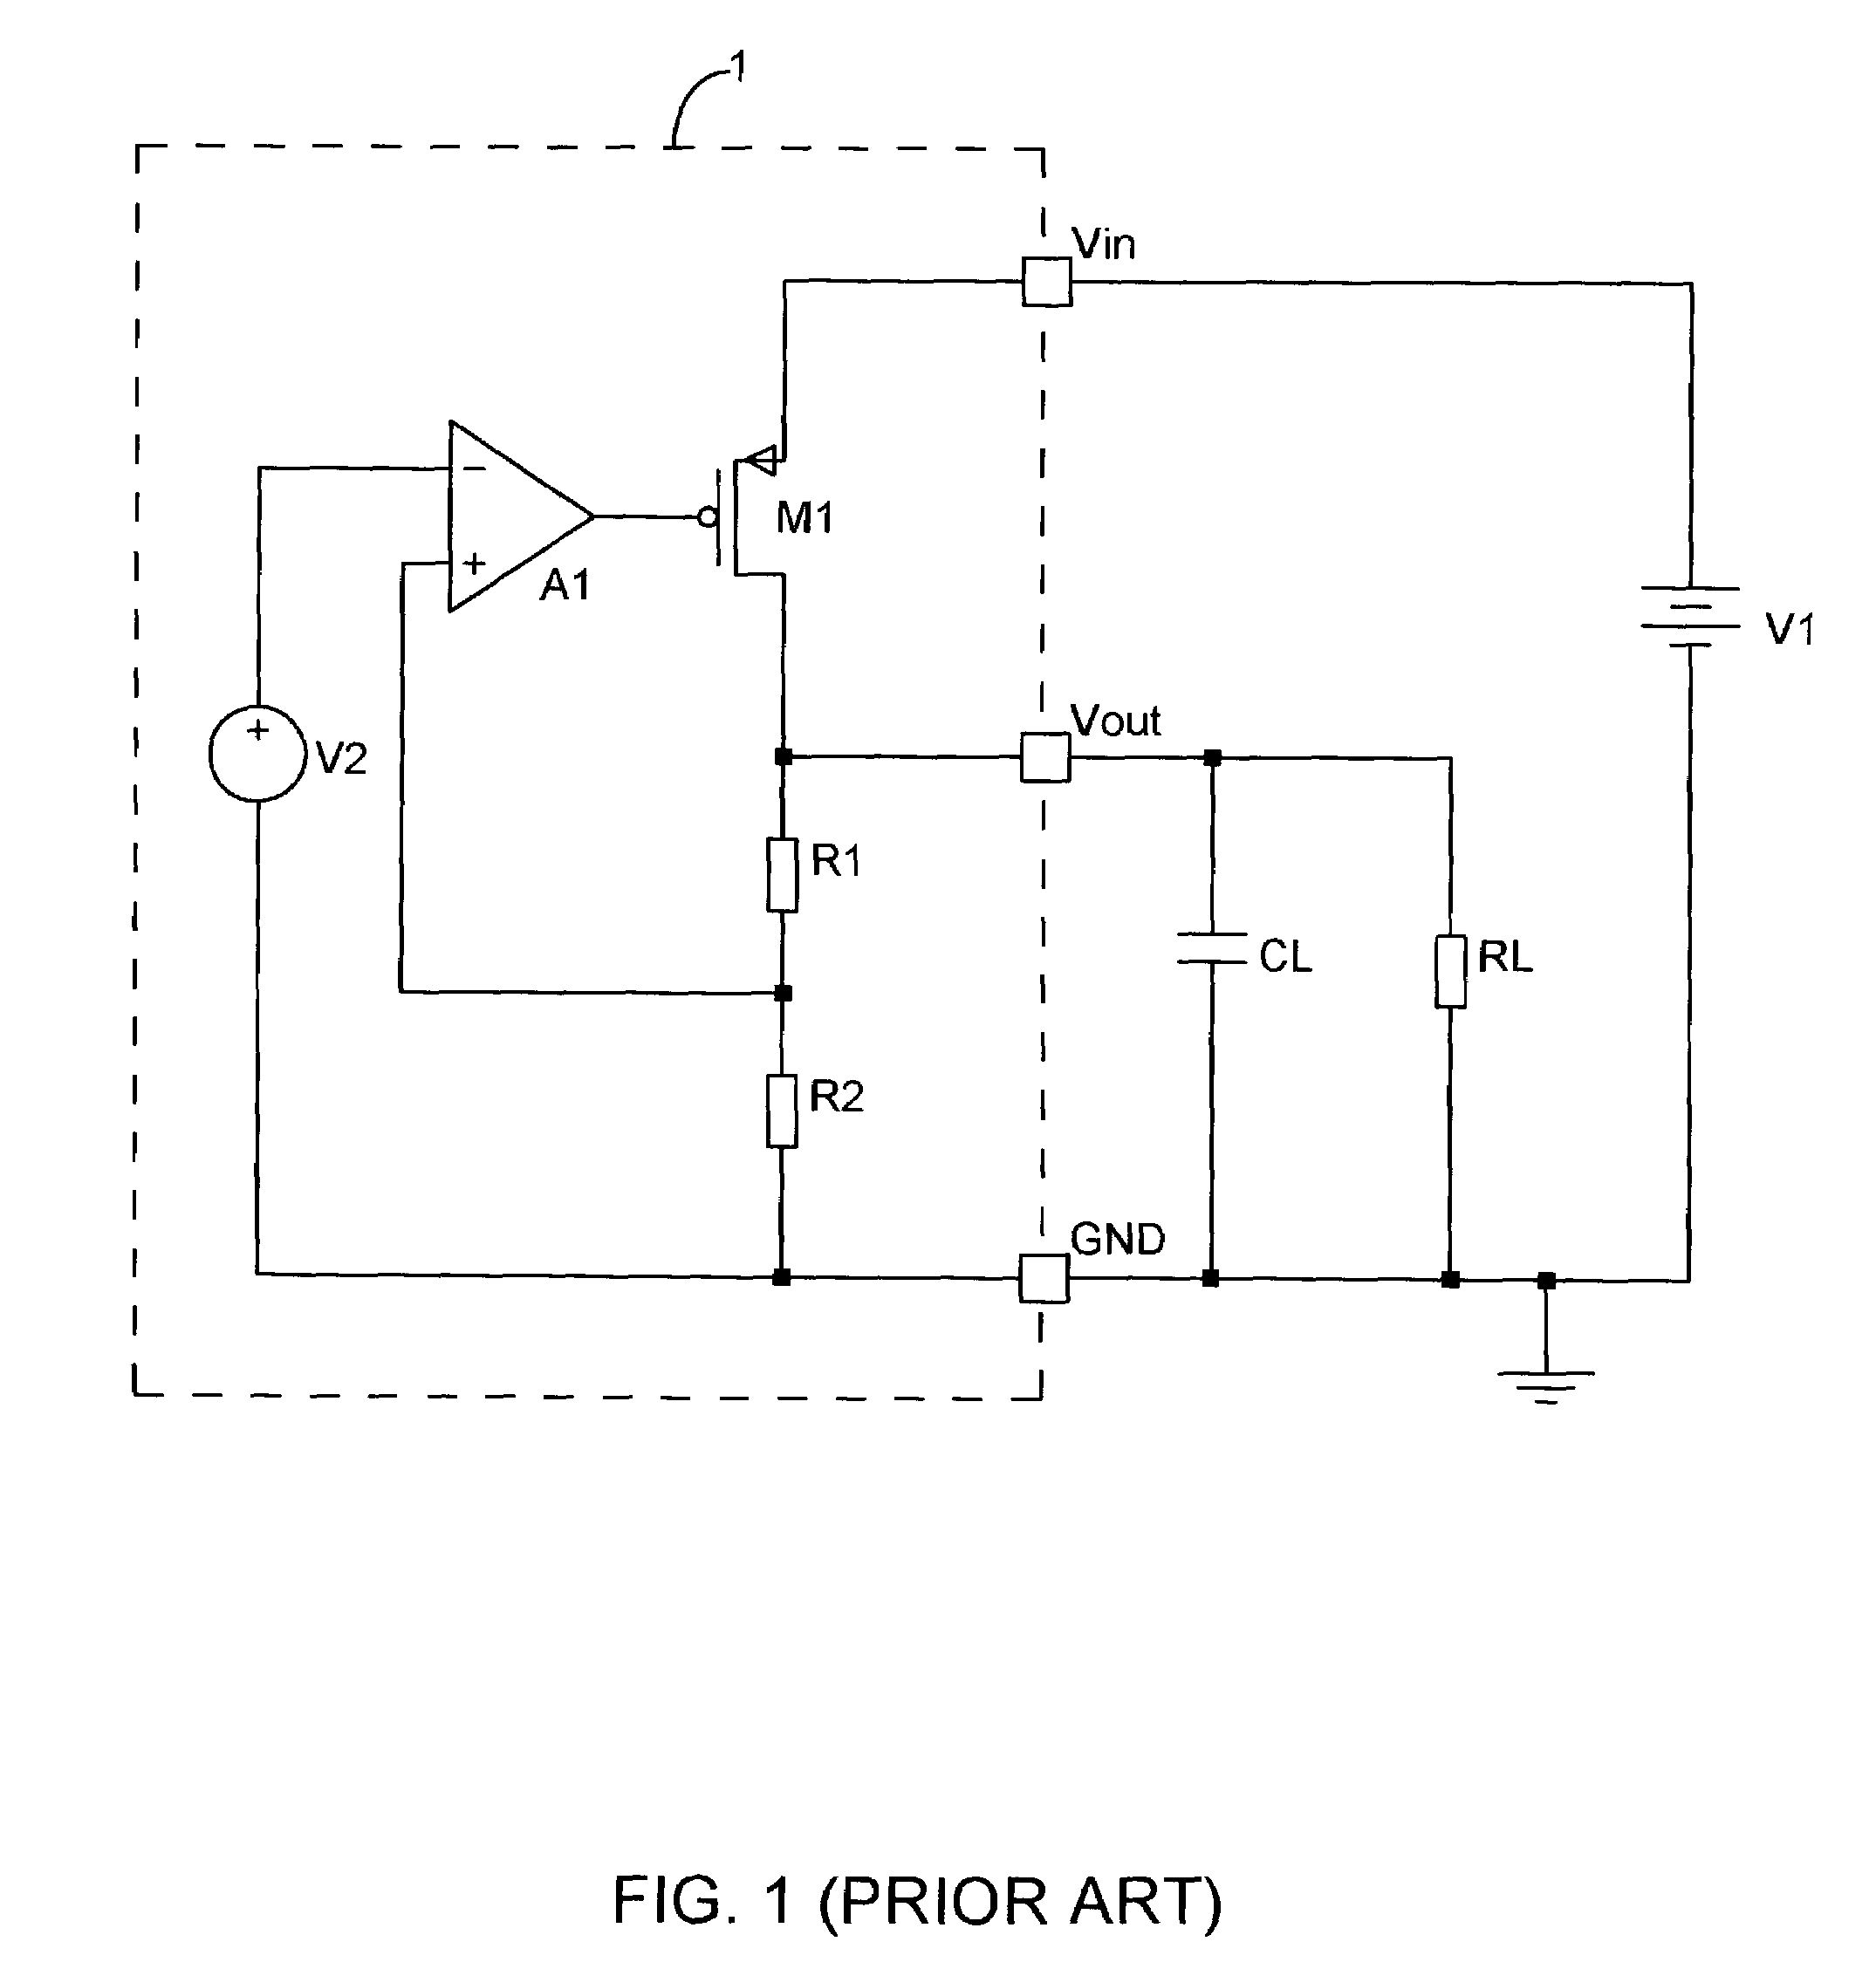 Low dropout voltage regulator using a depletion pass transistor